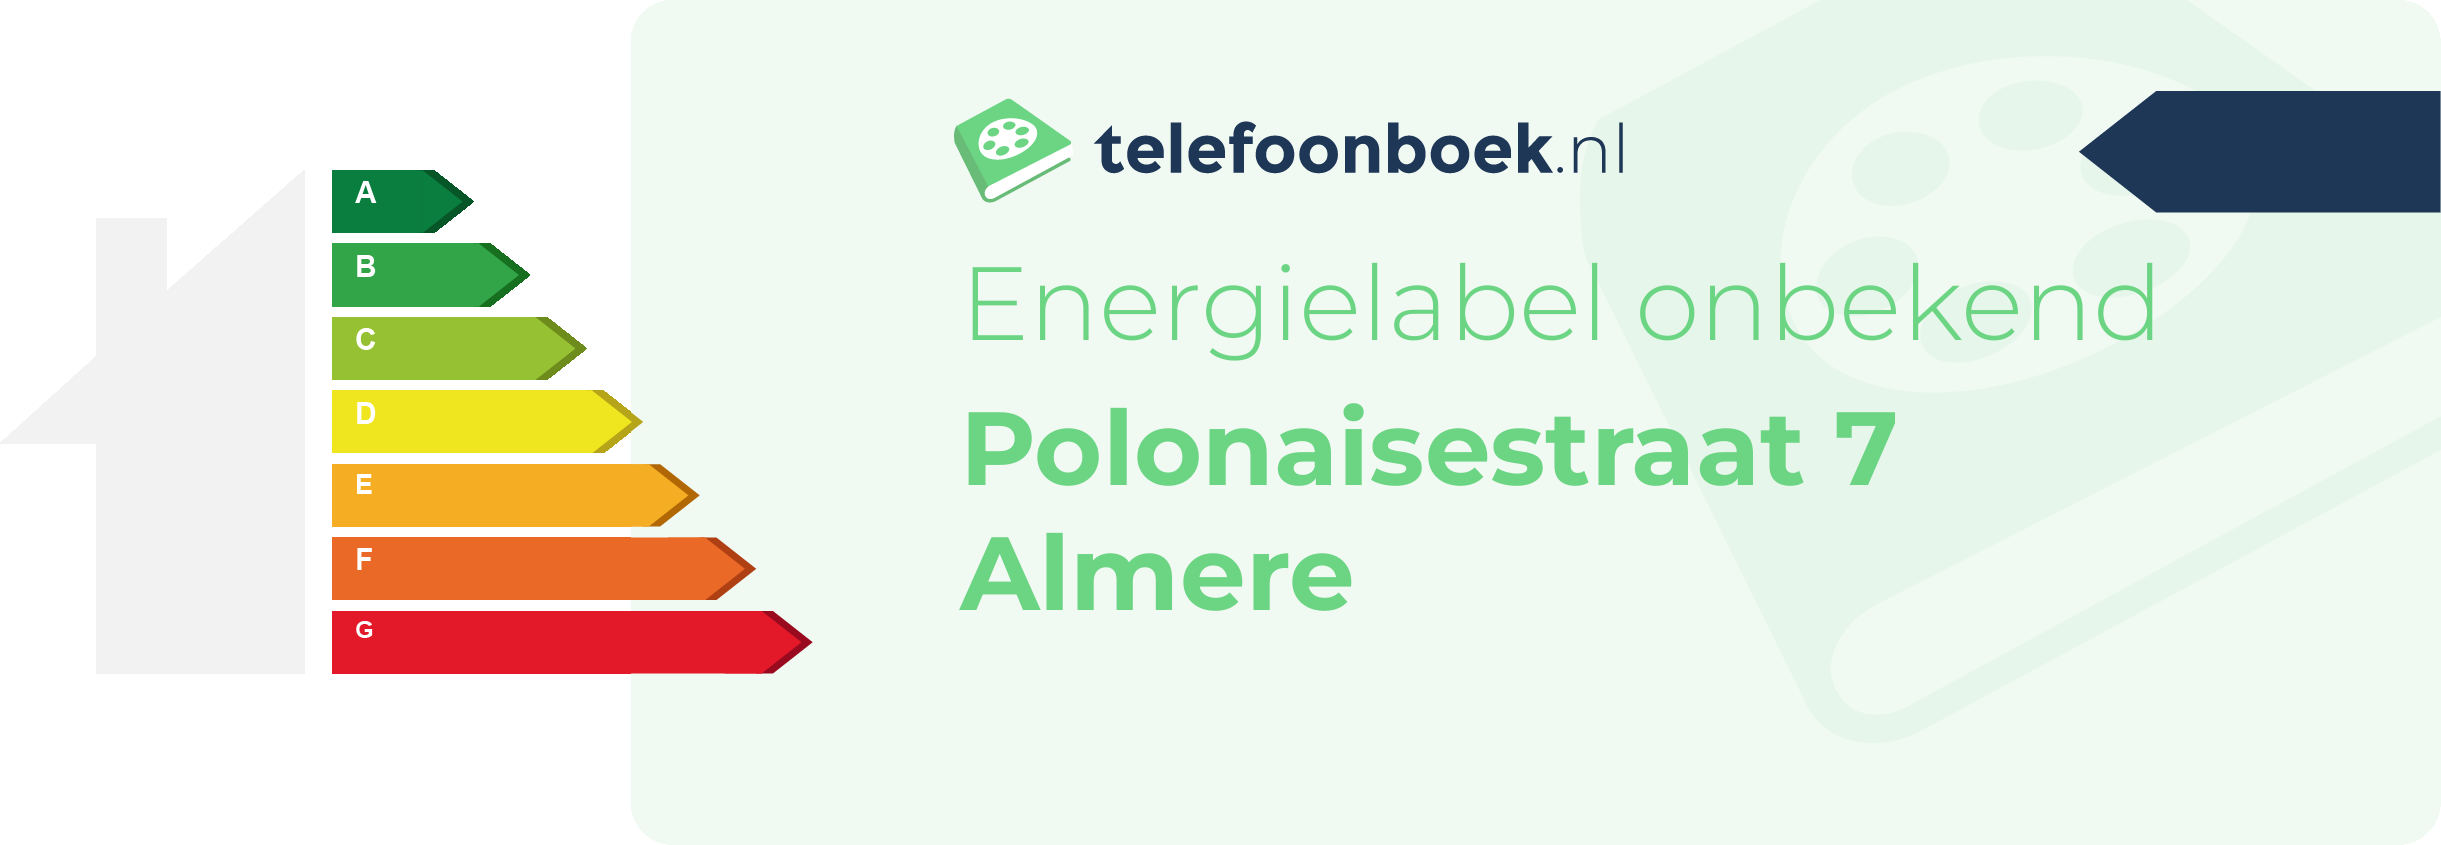 Energielabel Polonaisestraat 7 Almere